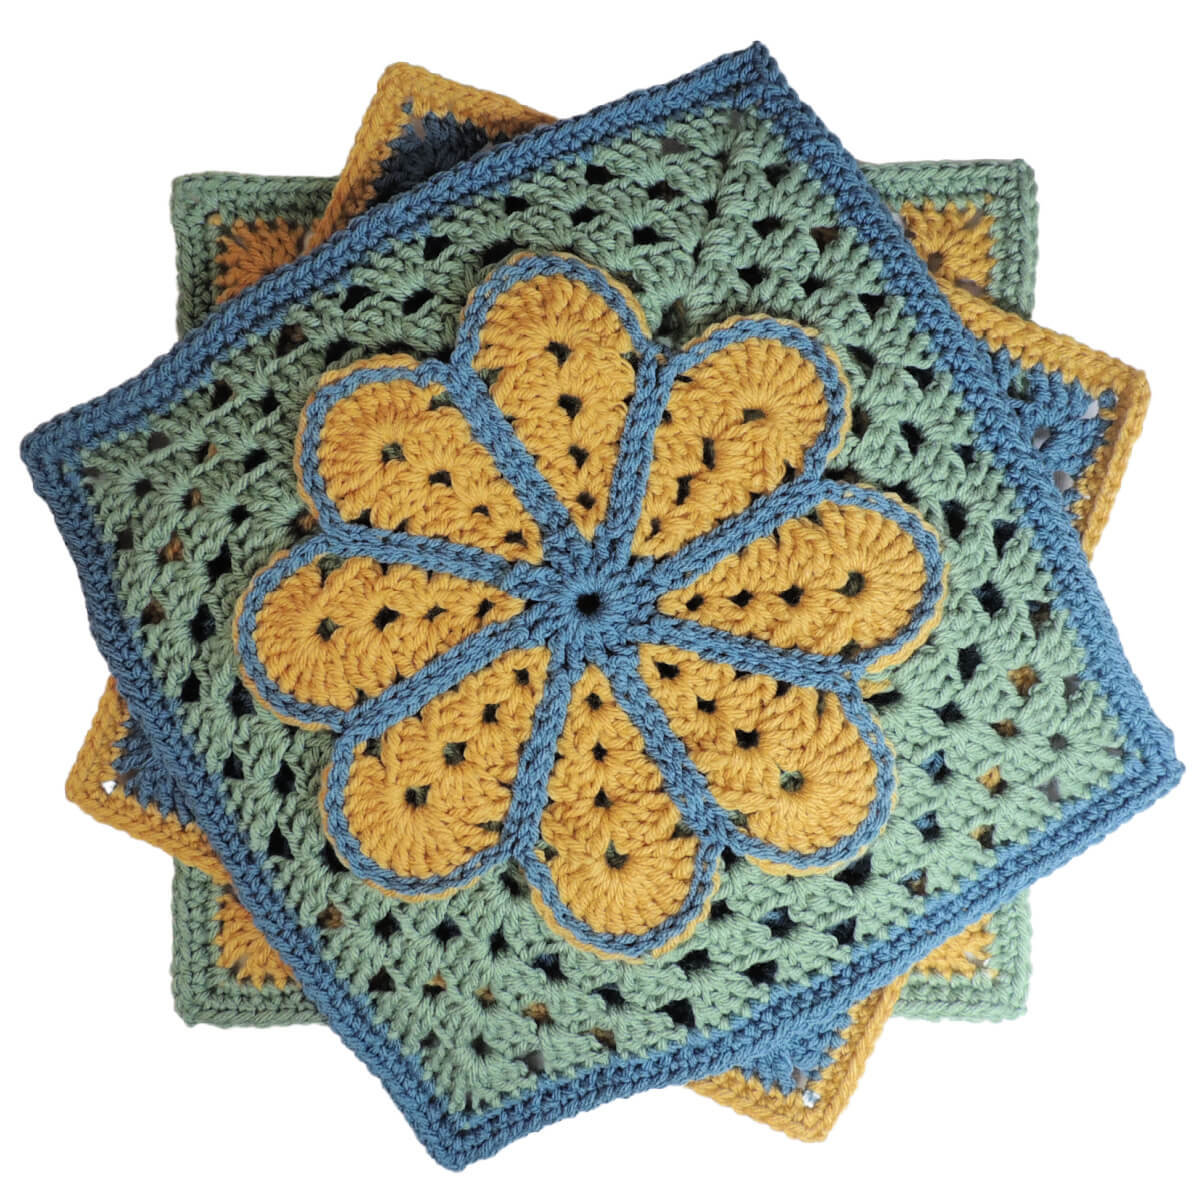 Finally found a heart granny square pattern I like : r/crochet